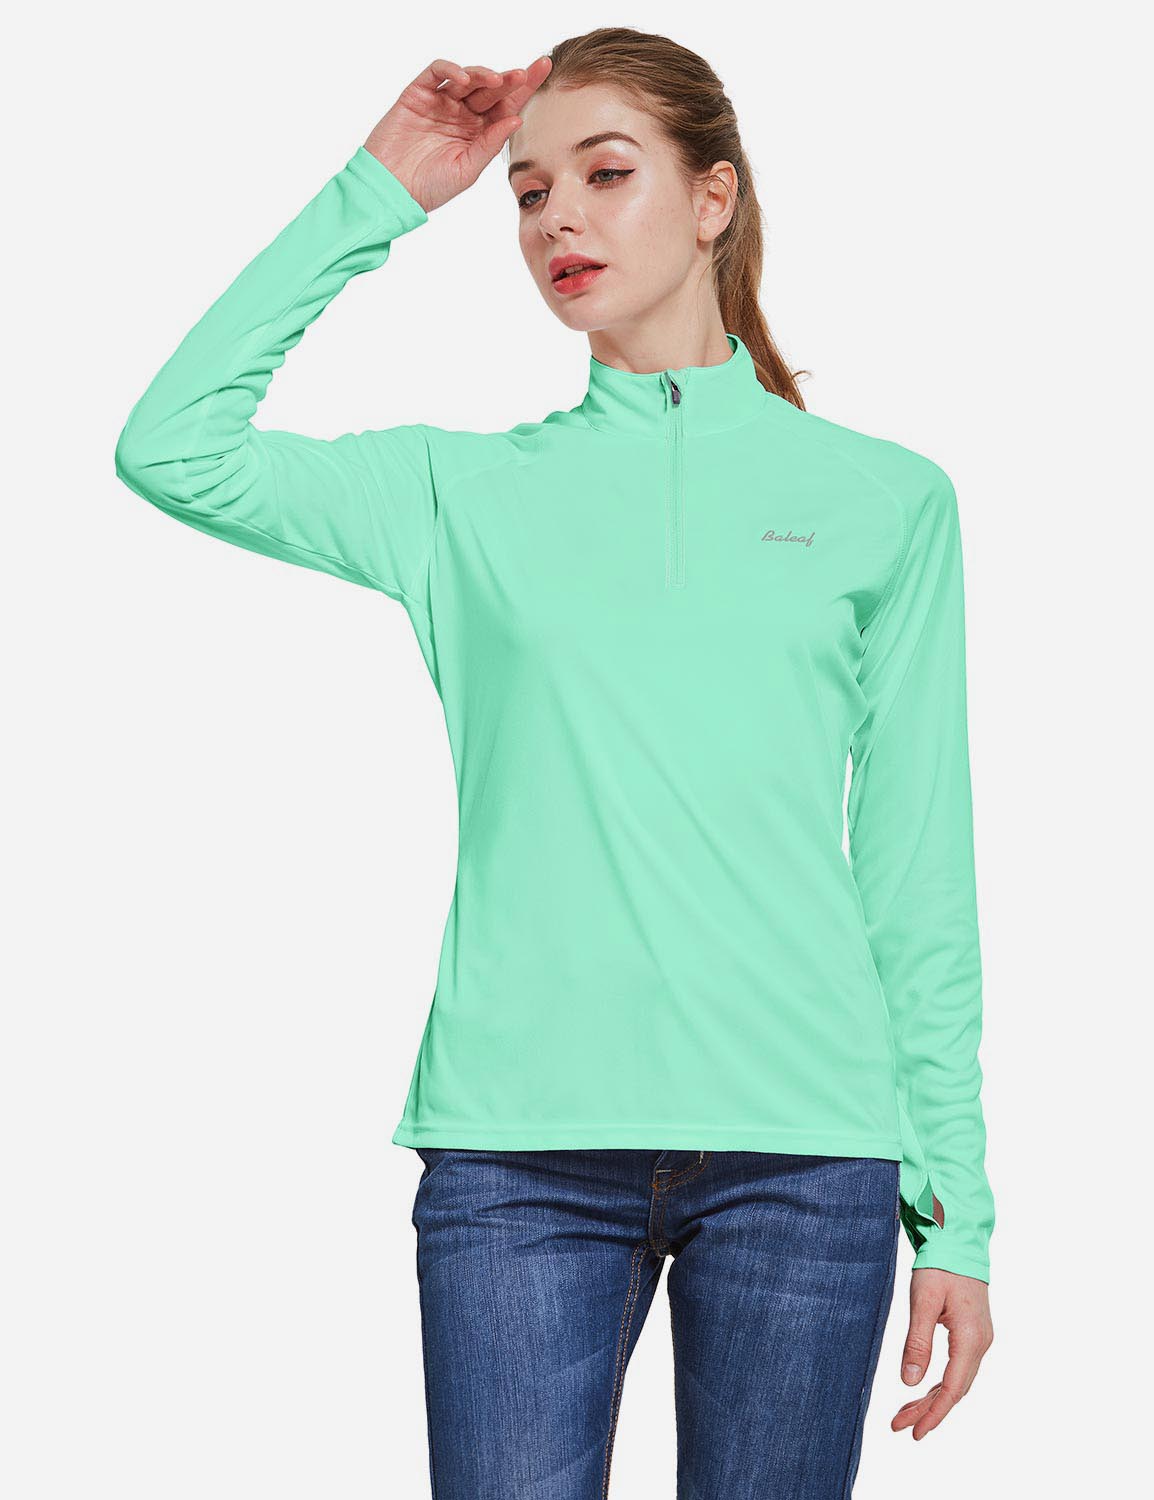 Baleaf Women's UP50+ Collared Long Sleeved Tshirt w Thumbholes aga065 Light Green Side